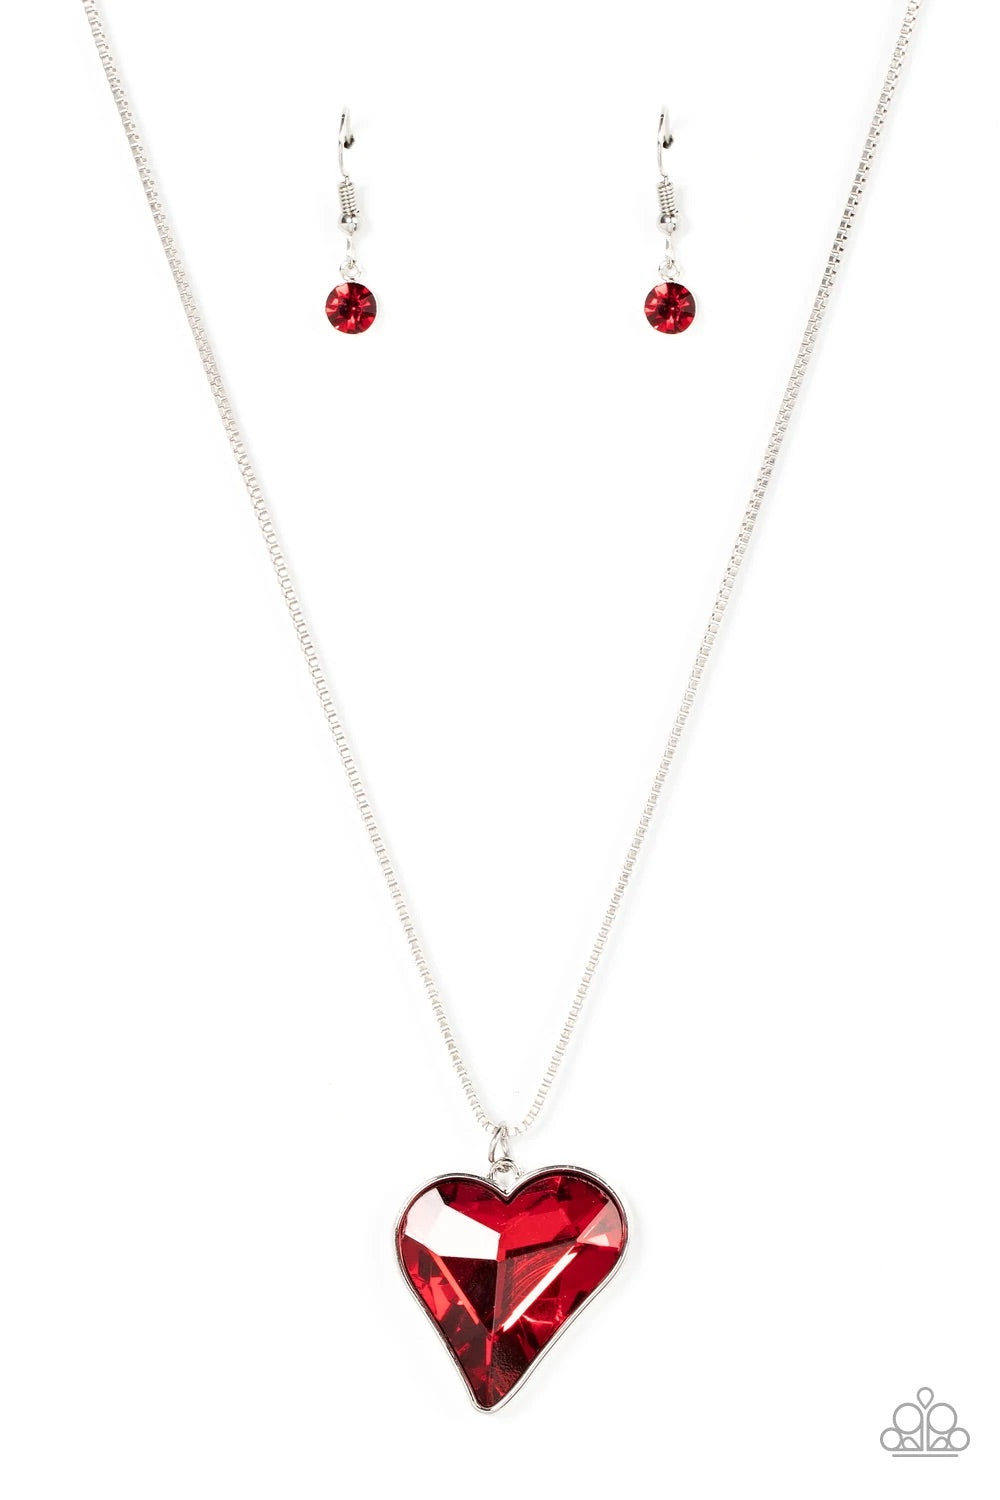 Lockdown My Heart - Red (Heart) Necklace freeshipping - JewLz4u Gemstone Gallery